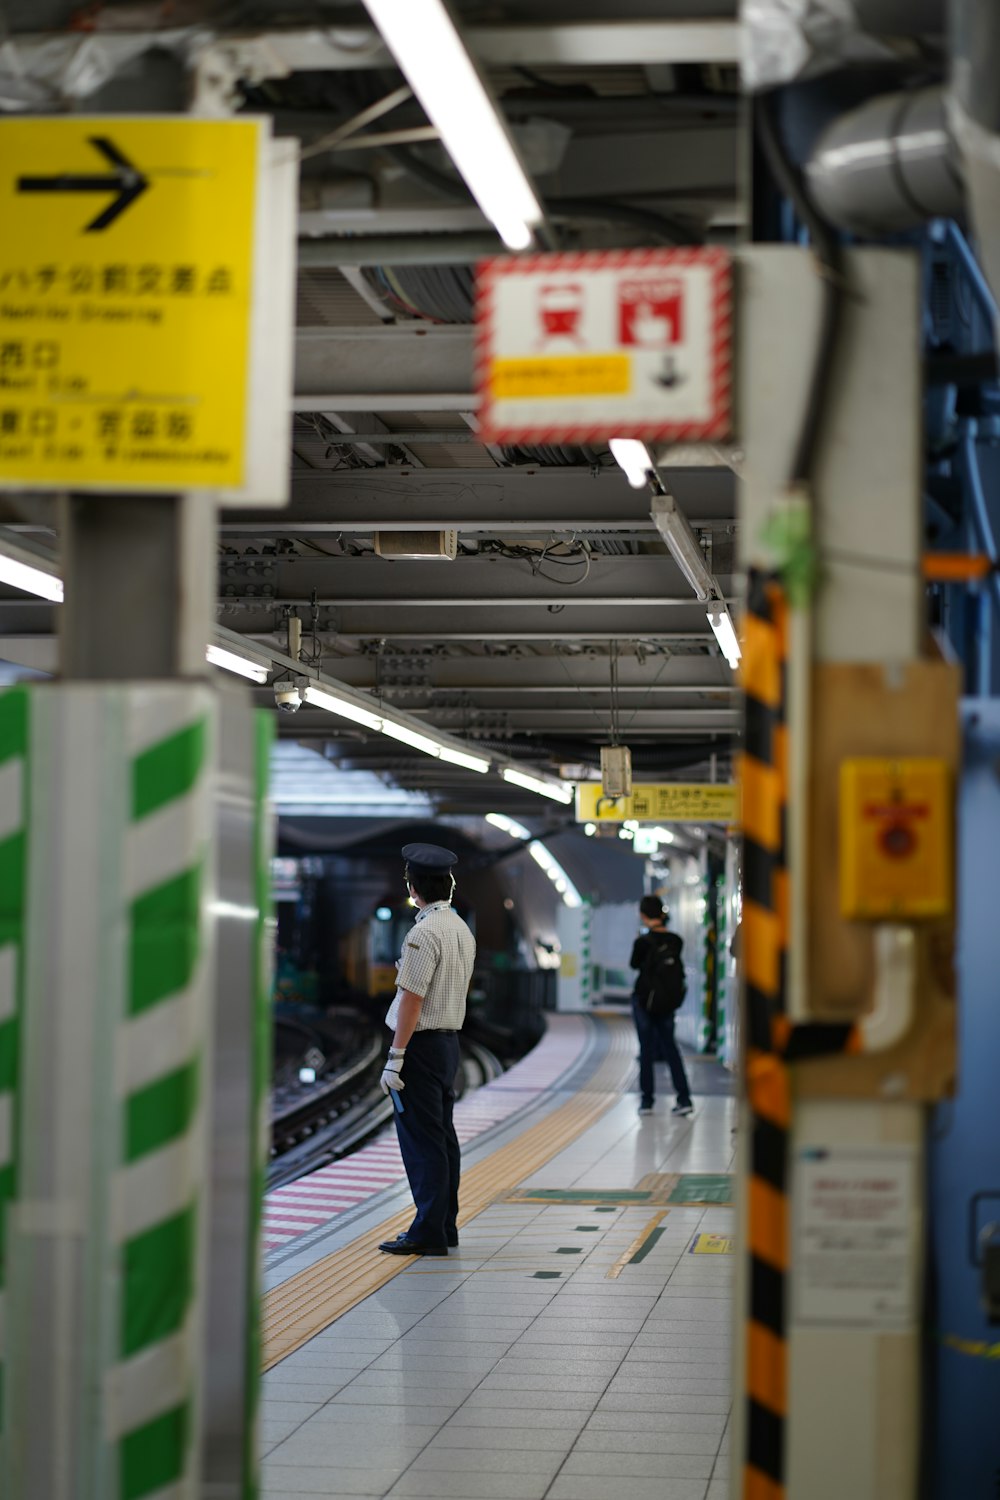 a man standing on a train platform next to a train